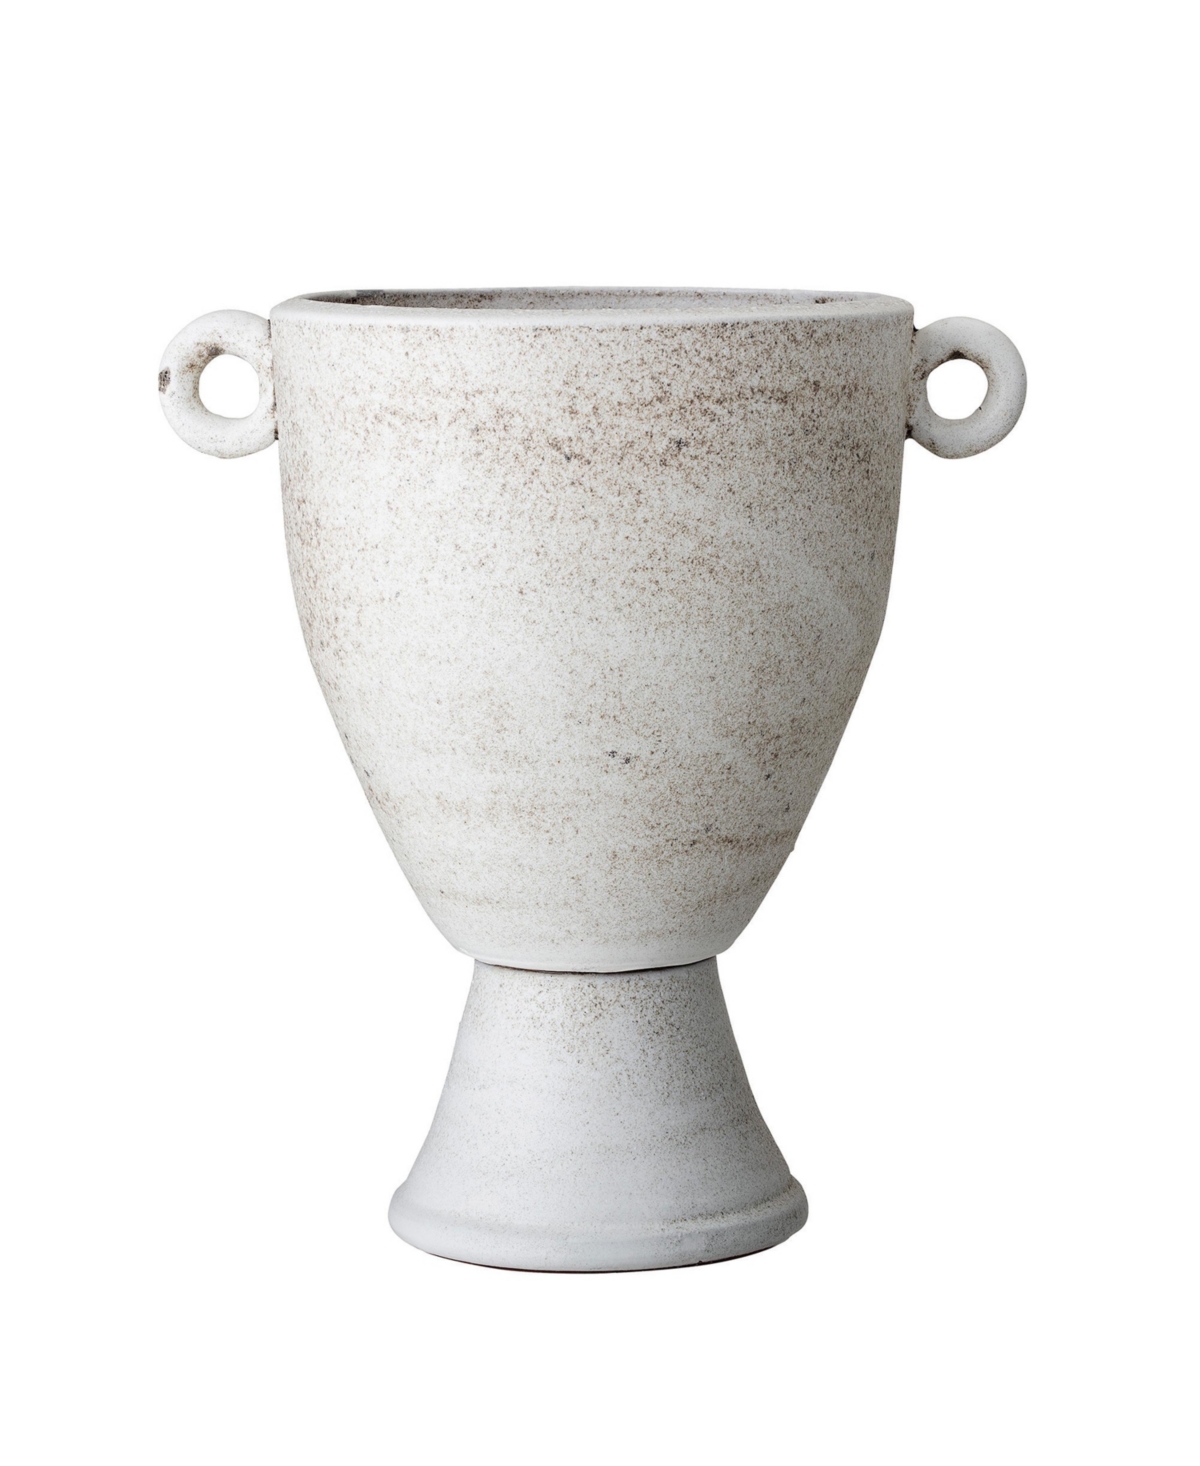 Bloomingville Stone Grey Terracotta Urn Style Planter with Reactive Glaze Finish